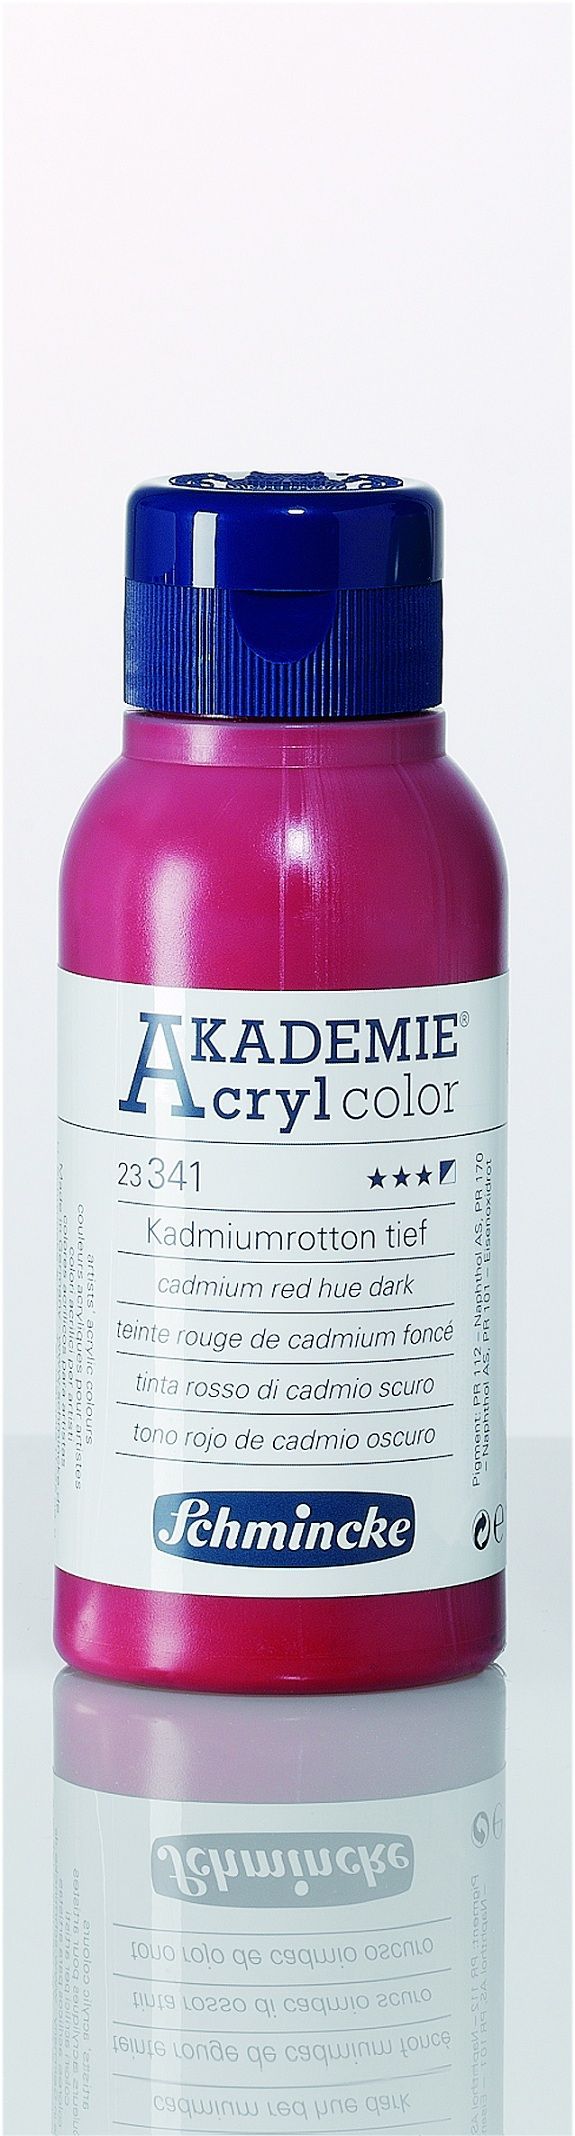 Schmincke AKADEMIE Acryl color 250ml